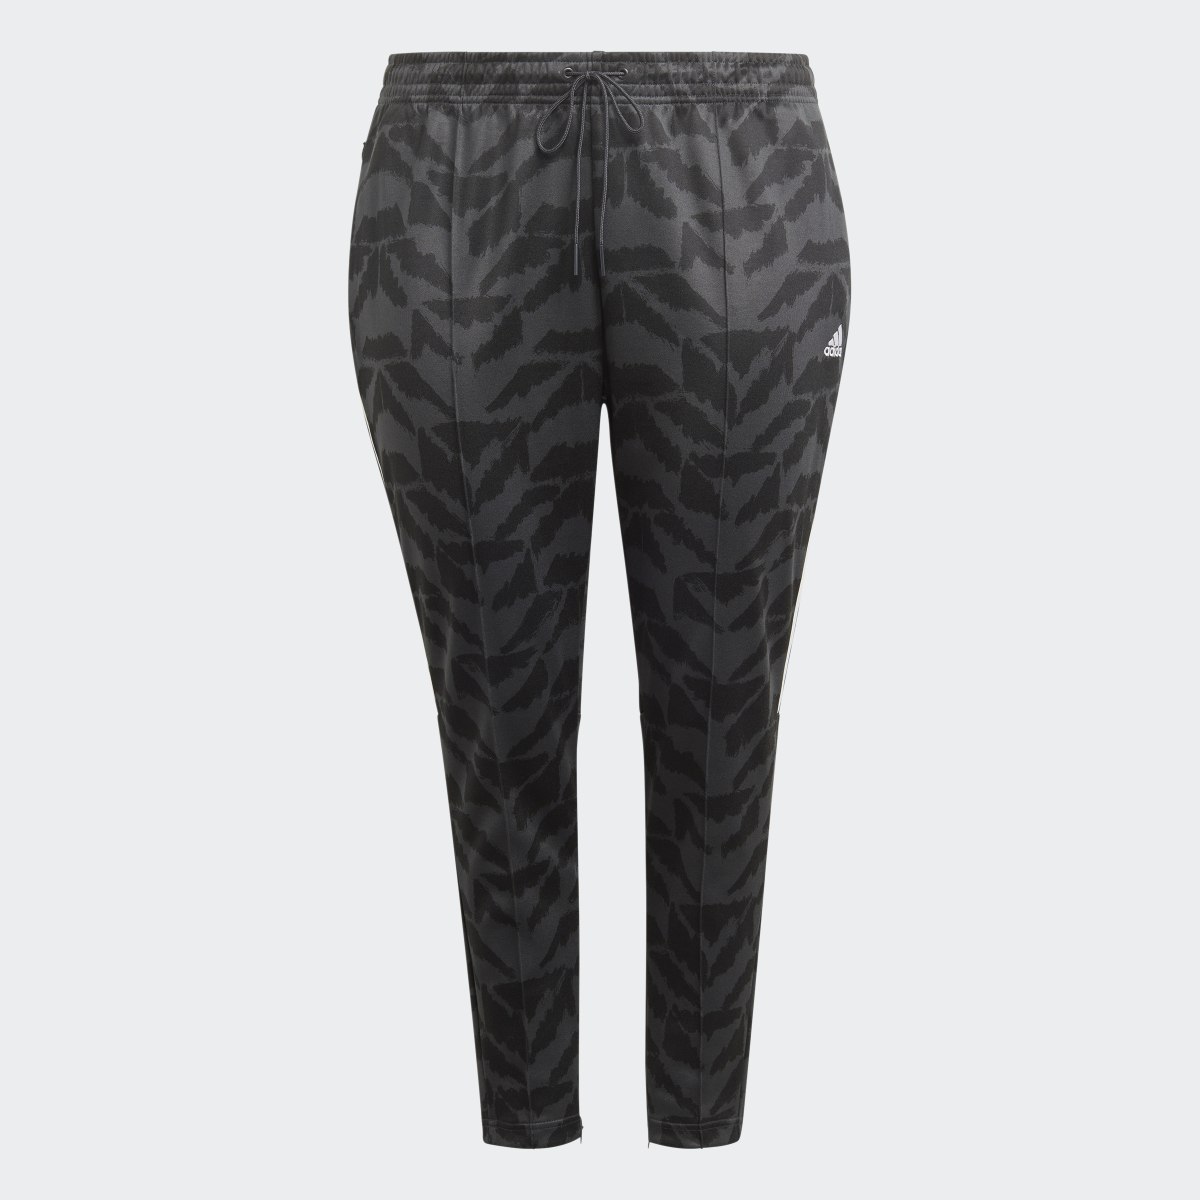 Adidas Track pants Tiro Suit Up Lifestyle (Curvy). 4